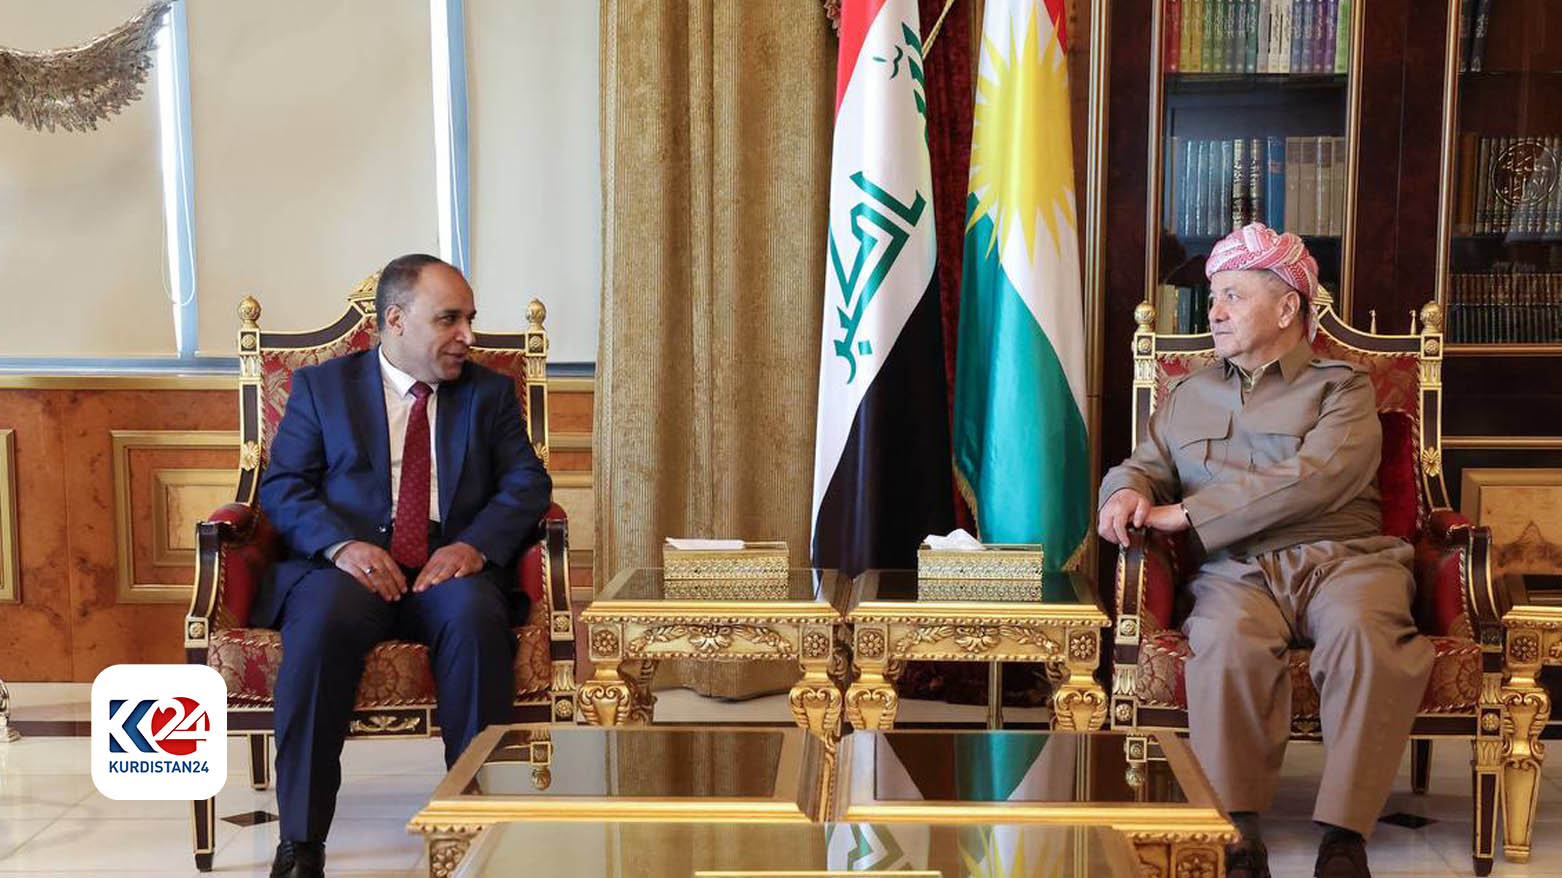 KDP President Masoud Barzani (R) and Judge Abbas Farhan Hussein (L). (Photo: Barzani HQ)